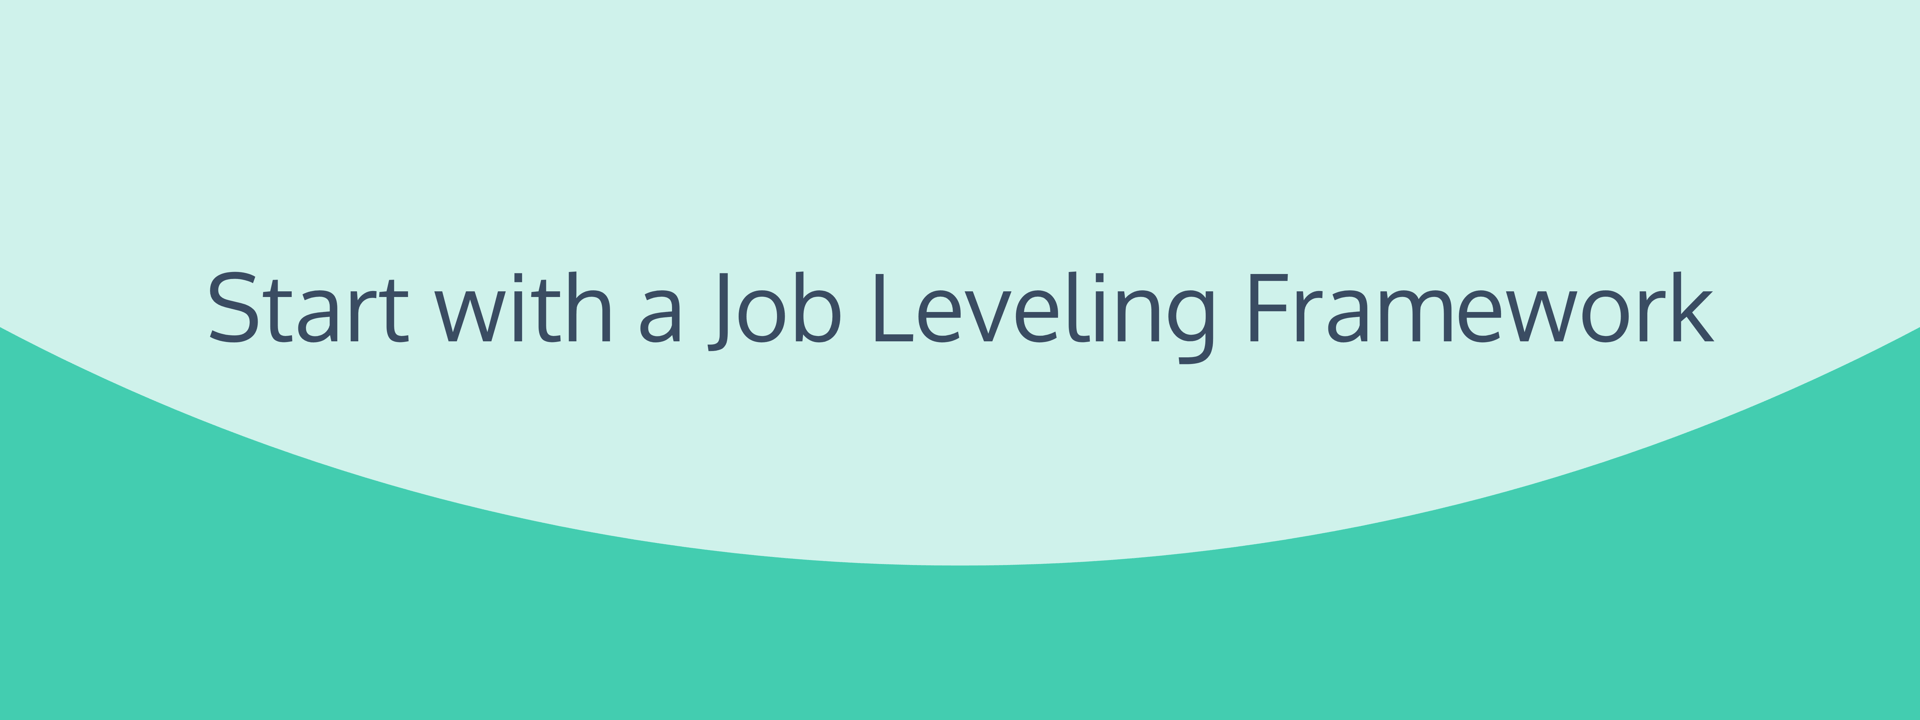 Start with a Job Leveling Framework